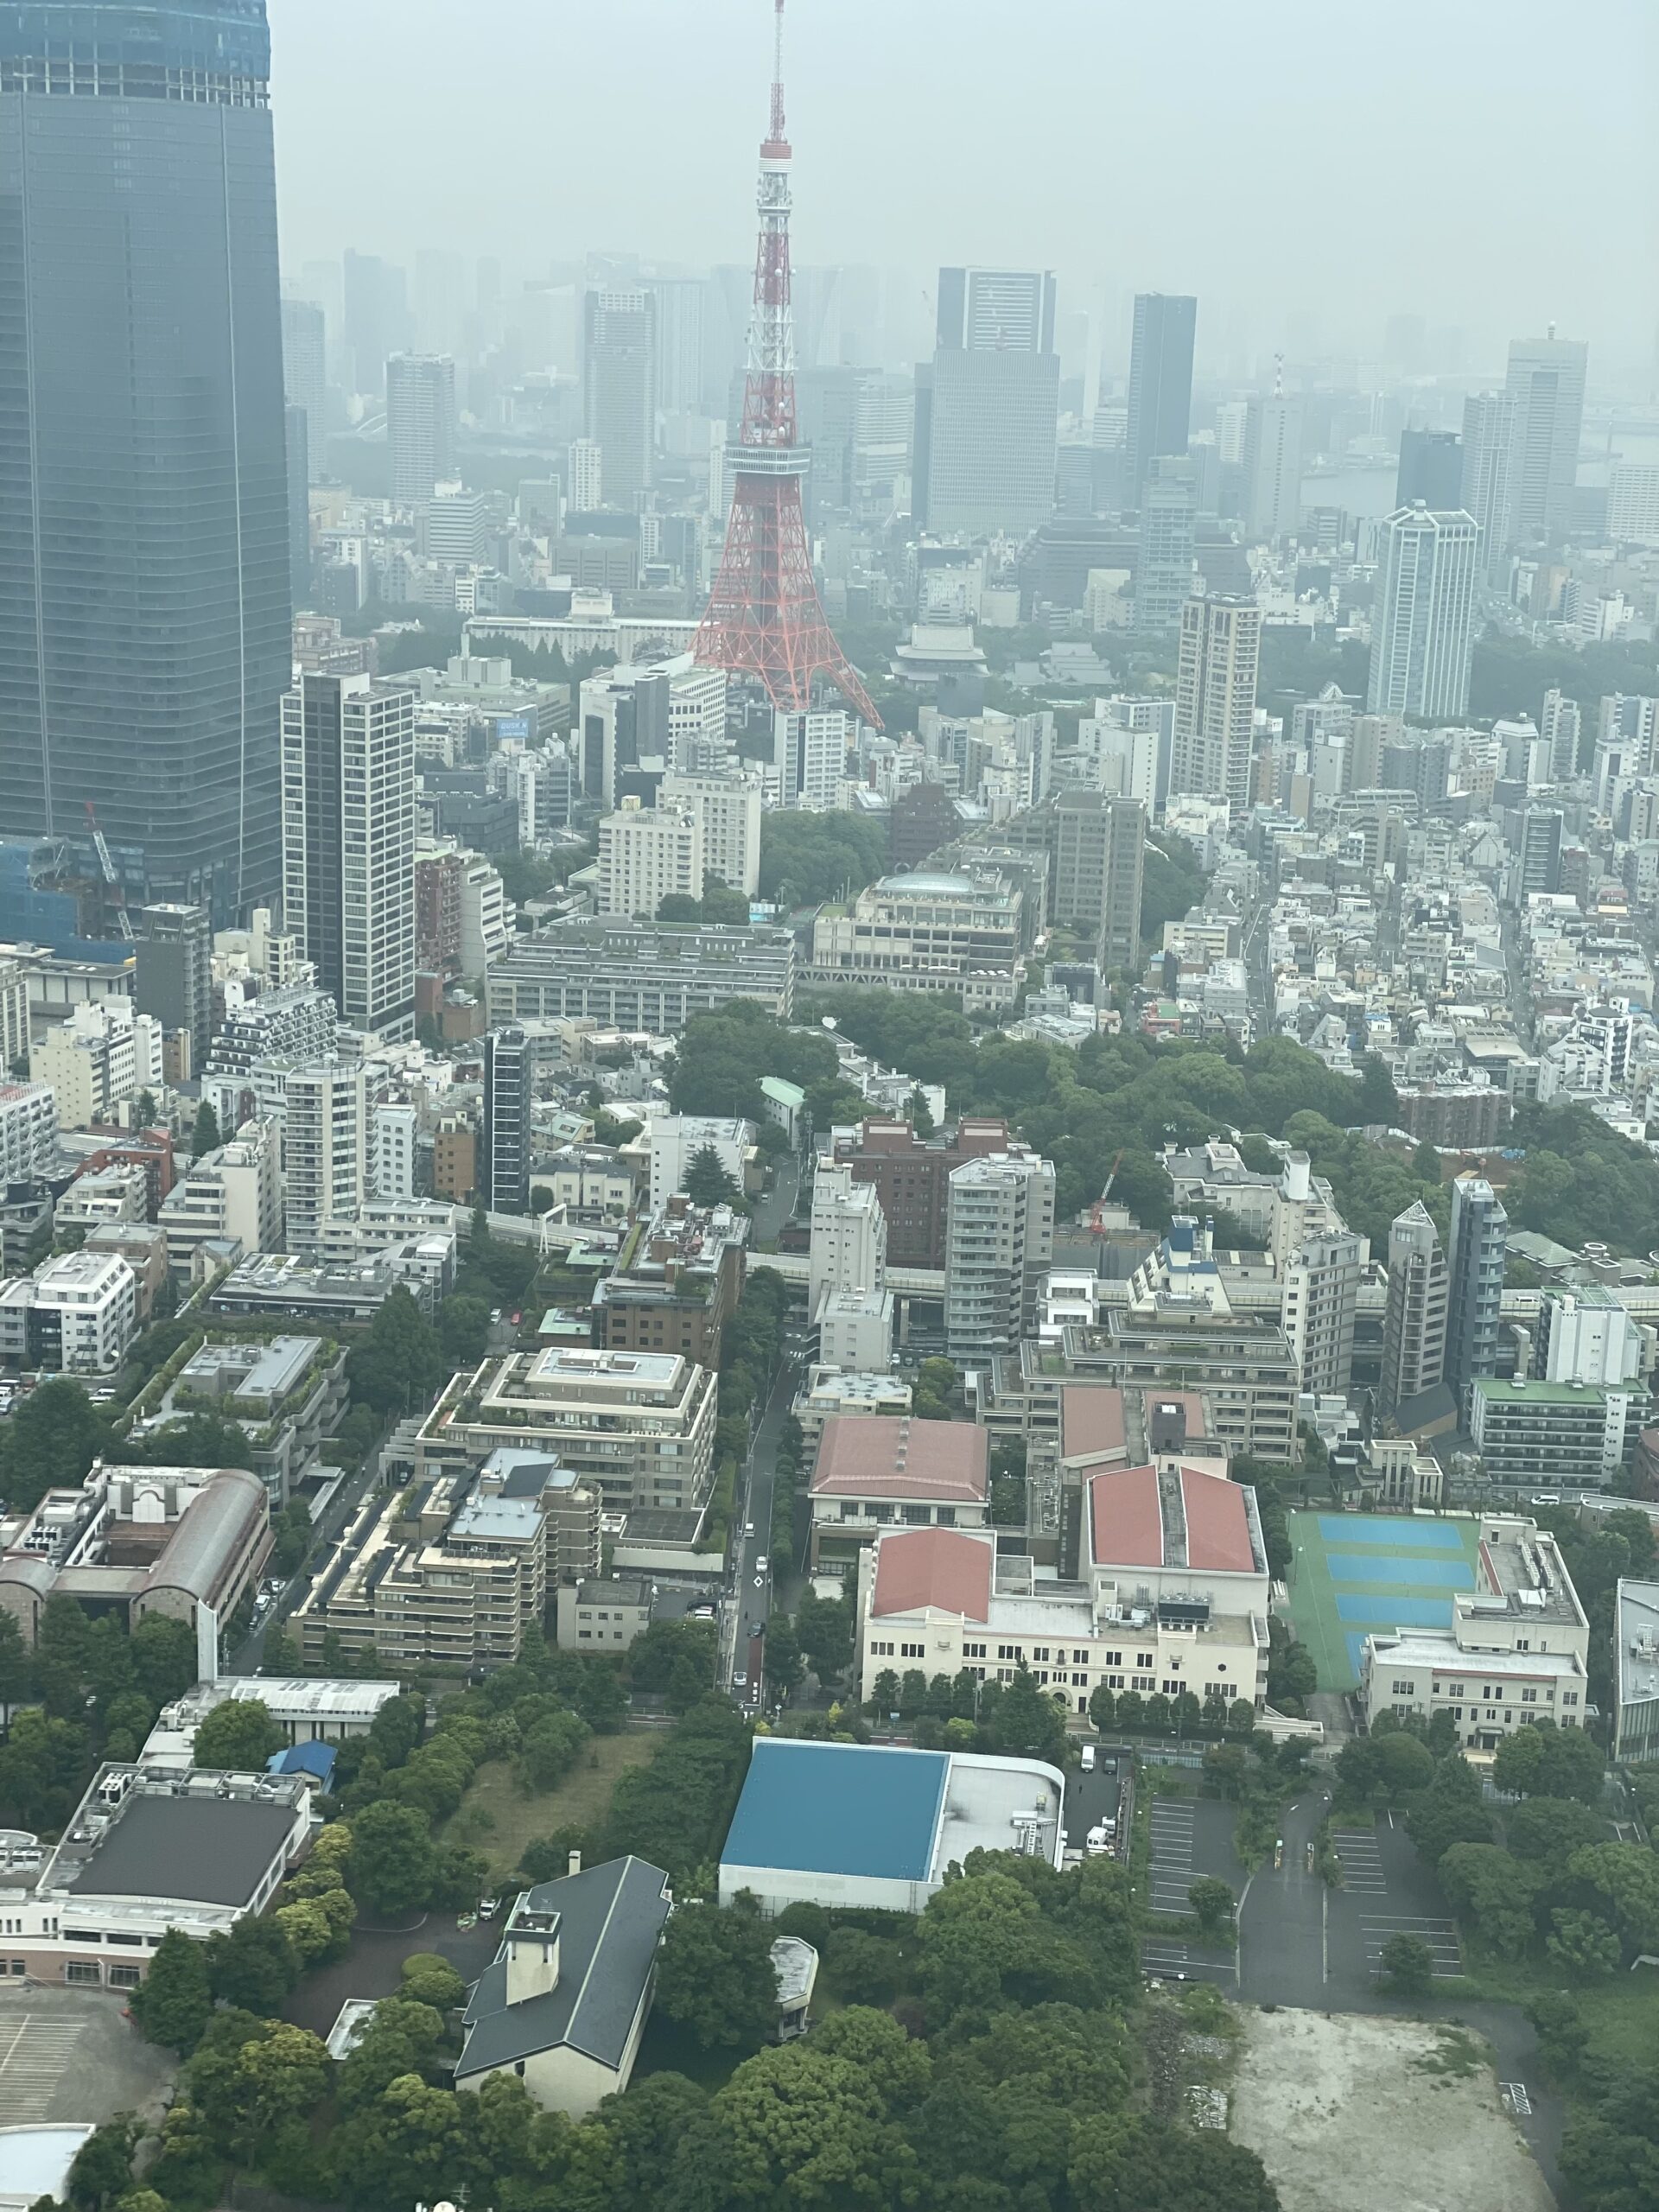 The city of Tokyo (Metropolitan business area)